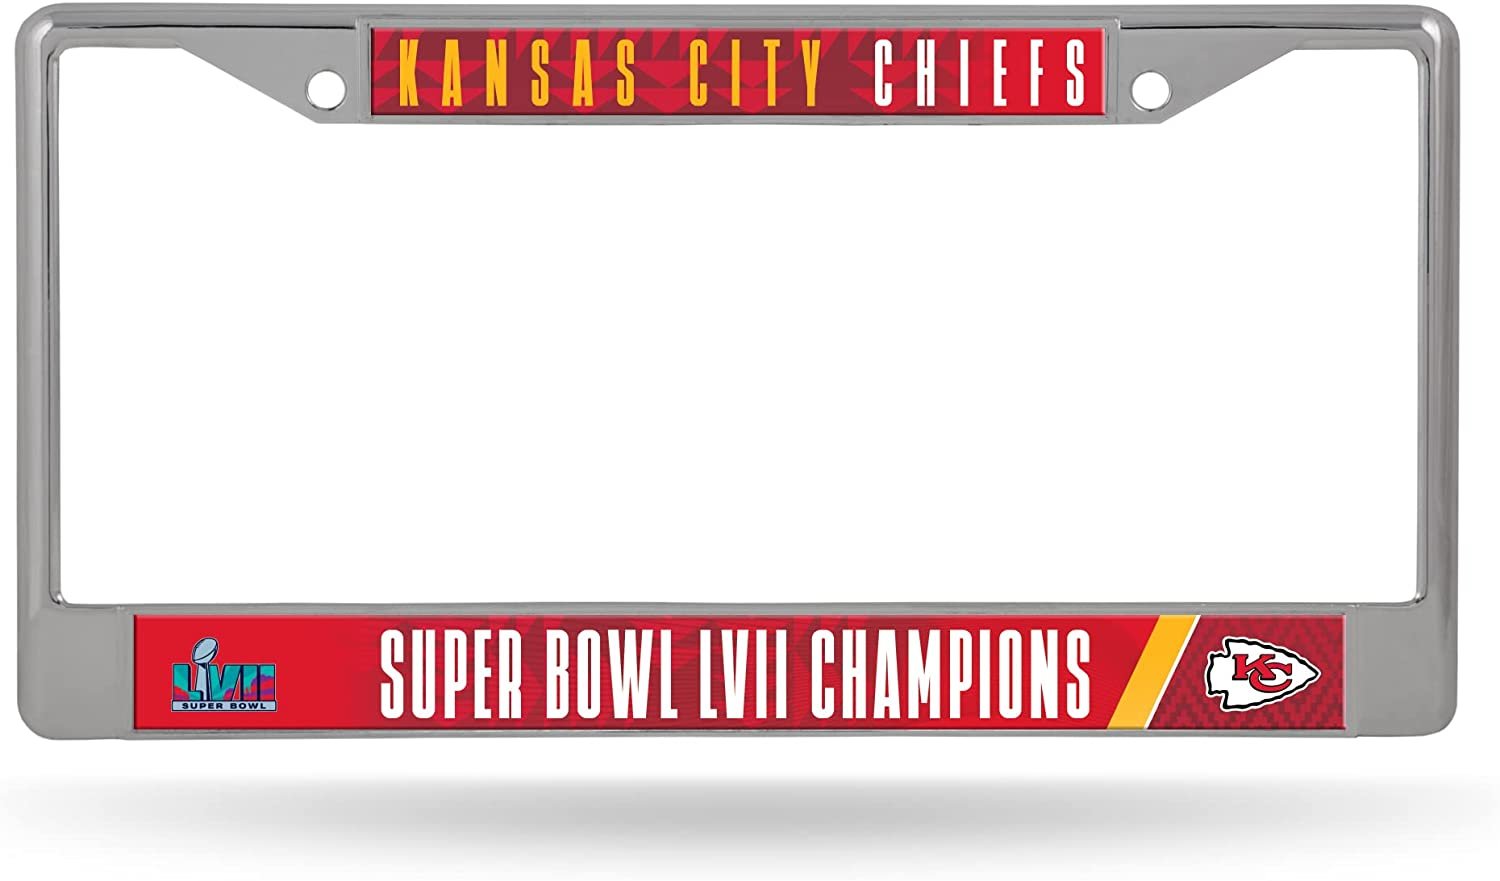 Kansas City Chiefs 2023 Super Bowl LVII Champions Metal License Plate Frame Chrome Tag Cover 6x12 Inch